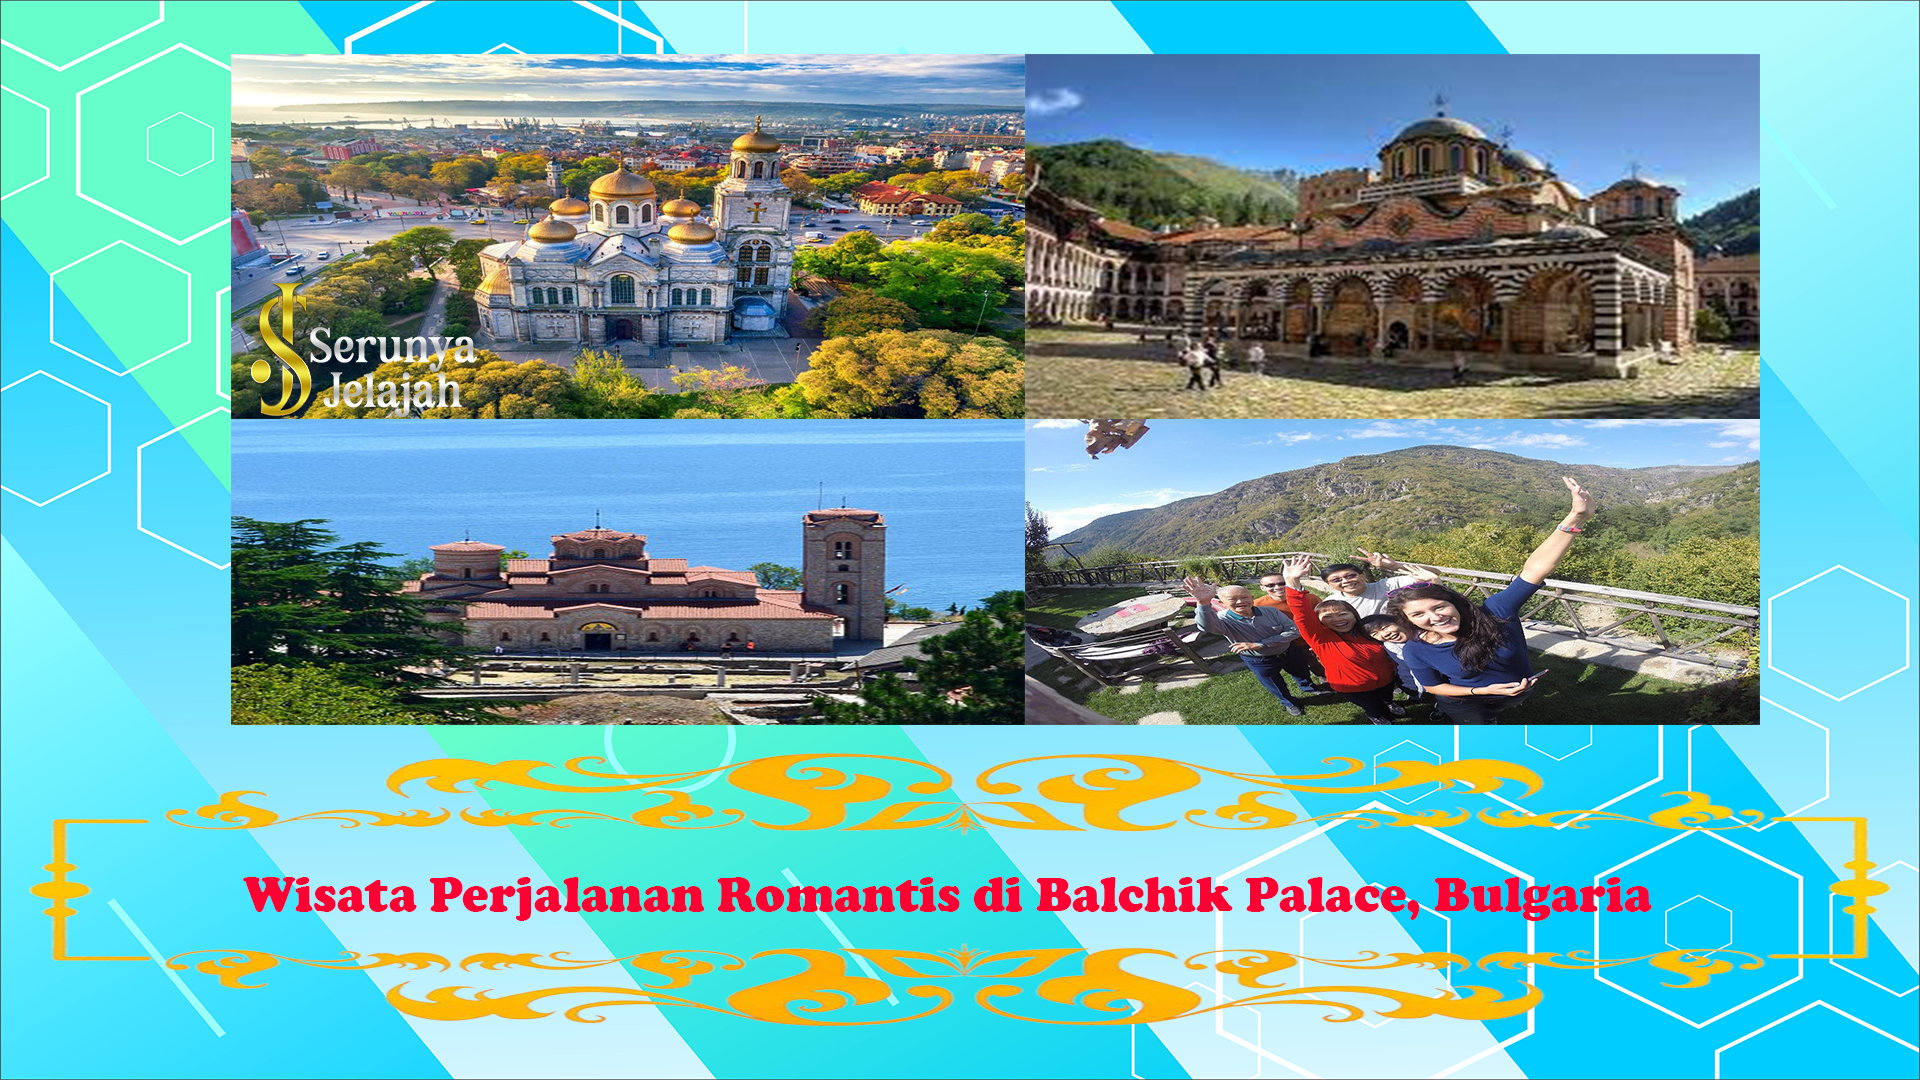 Wisata Perjalanan Romantis di Balchik Palace, Bulgaria